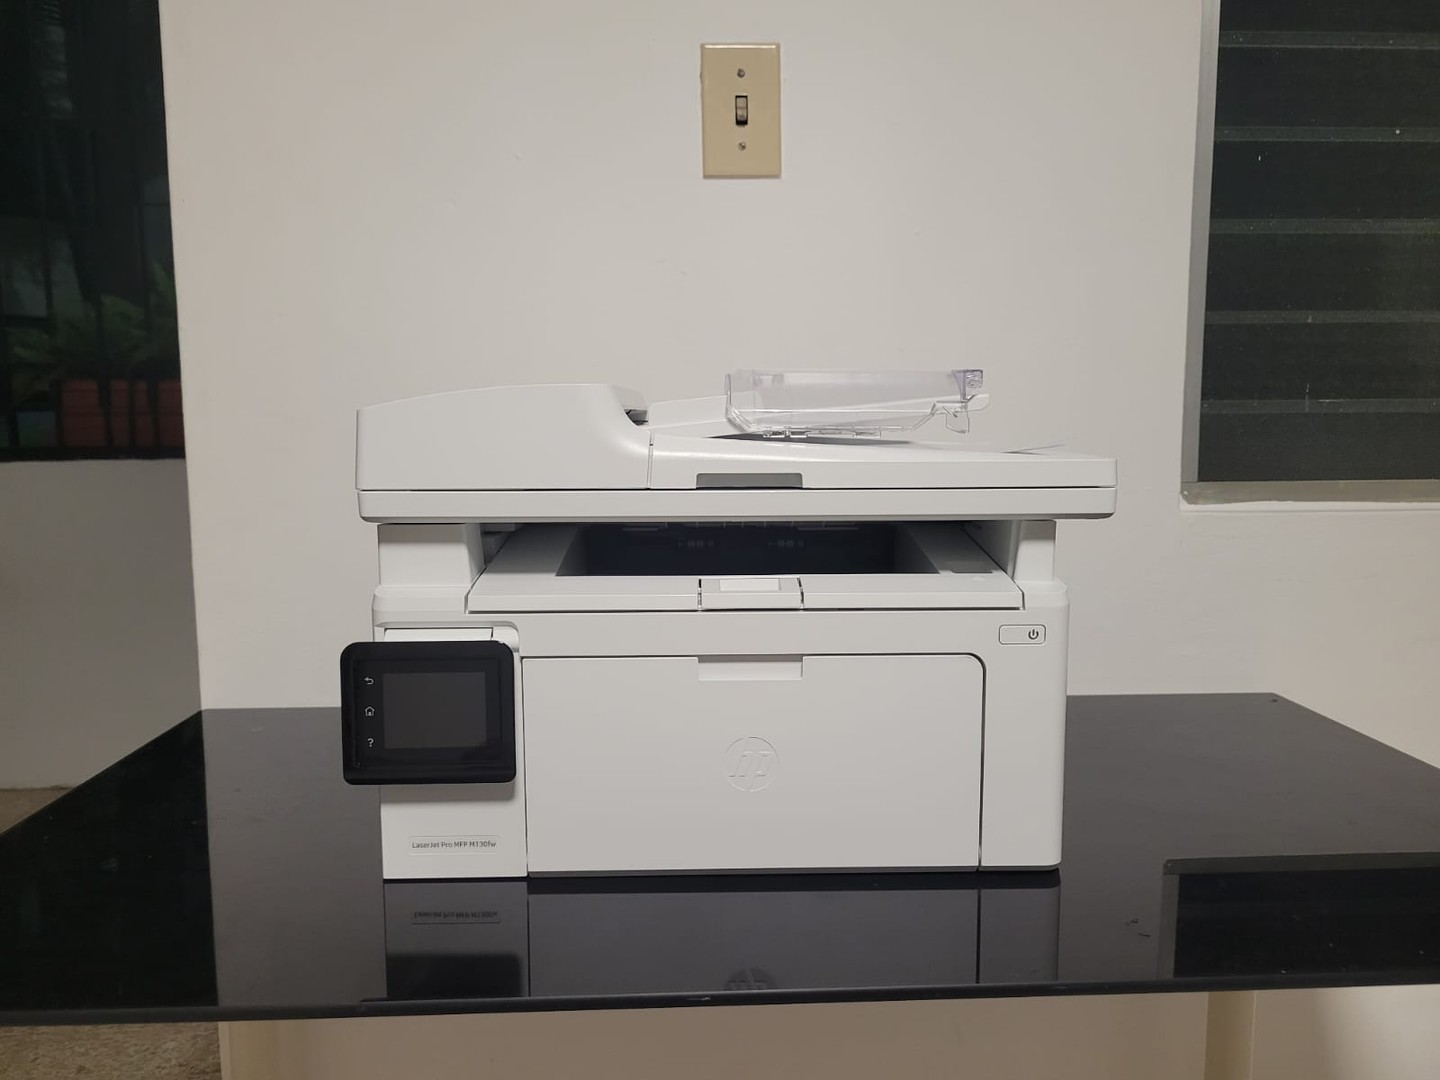 impresoras y scanners - Impresora HP Laserjet Pro M130fn - Impresora láser todo en uno, Gris Claro